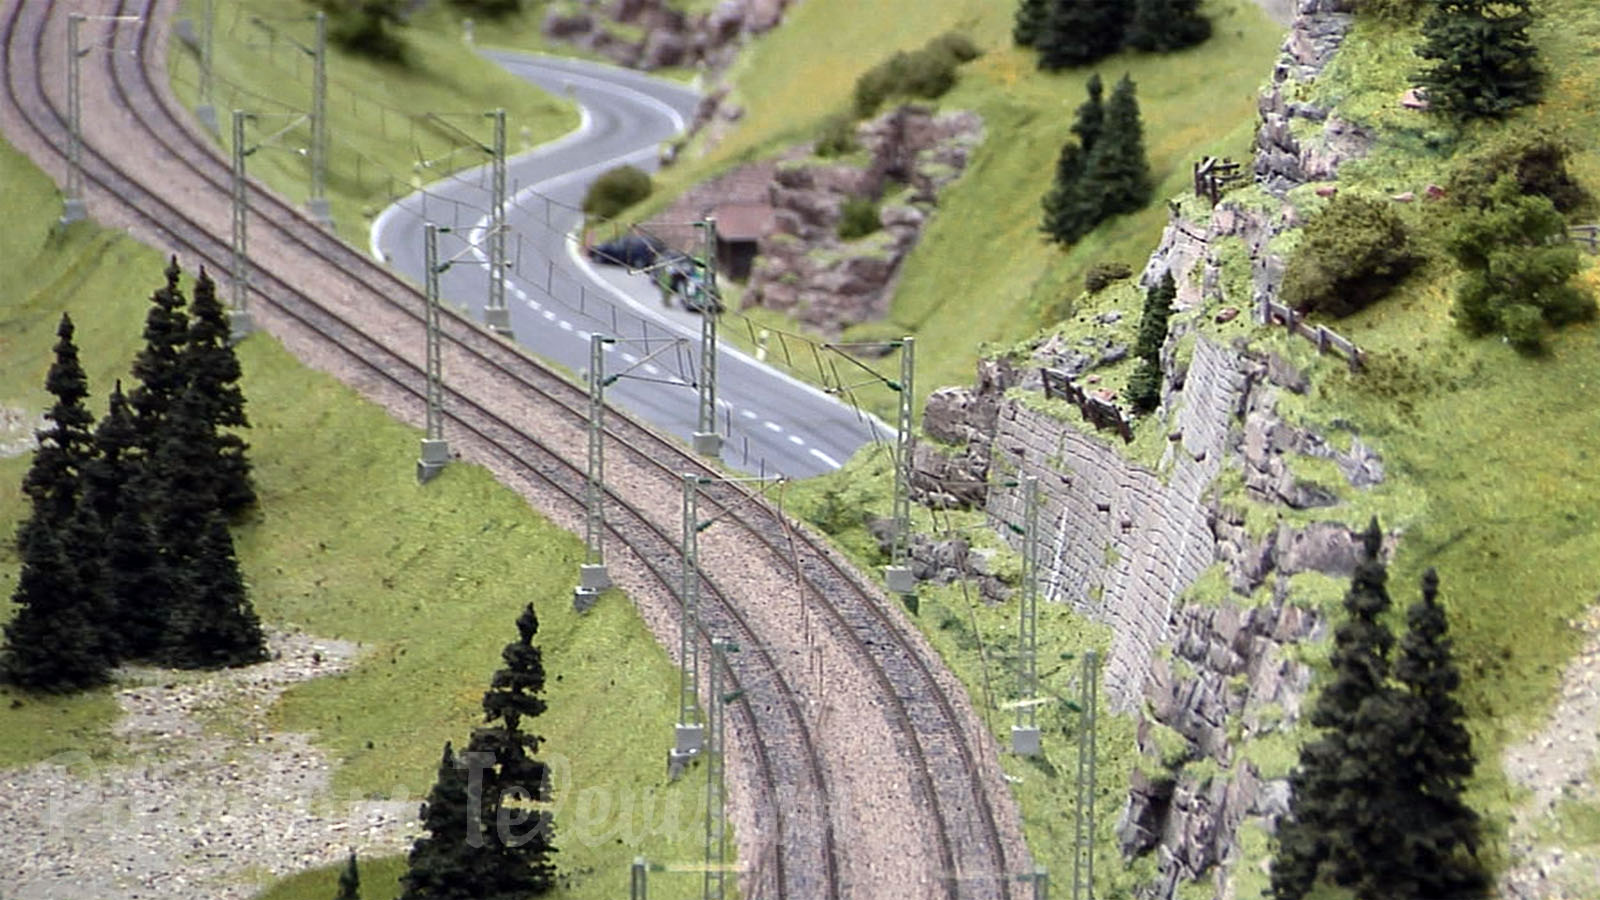 Fleischmann HO Scale Model Railroads and Trains - Realistic Model Train Layout built by Artist Bernhard Stein